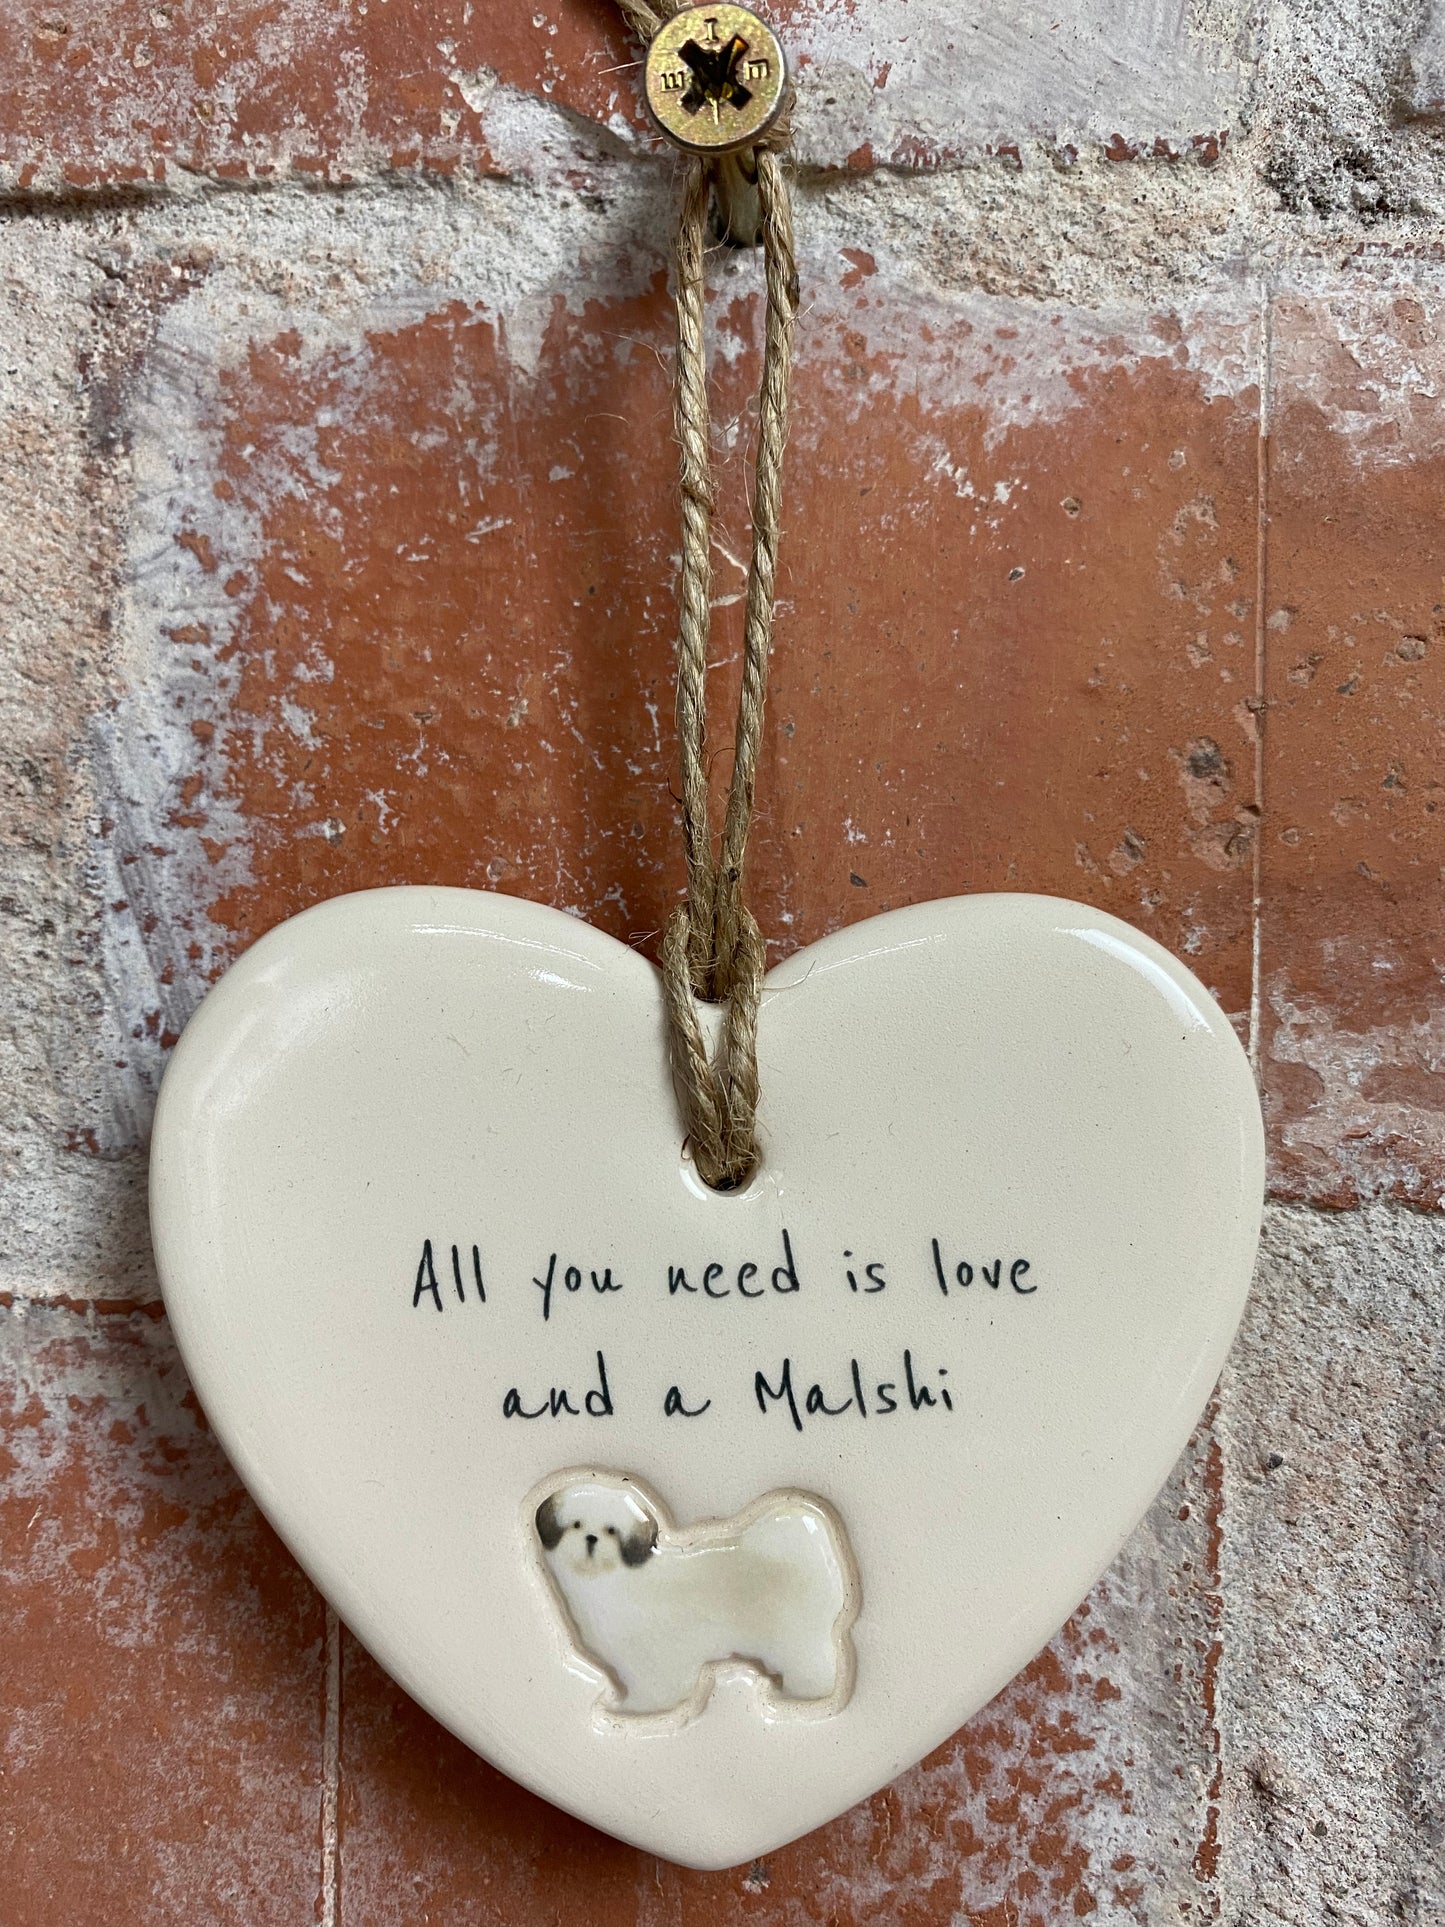 Malshi ceramic heart